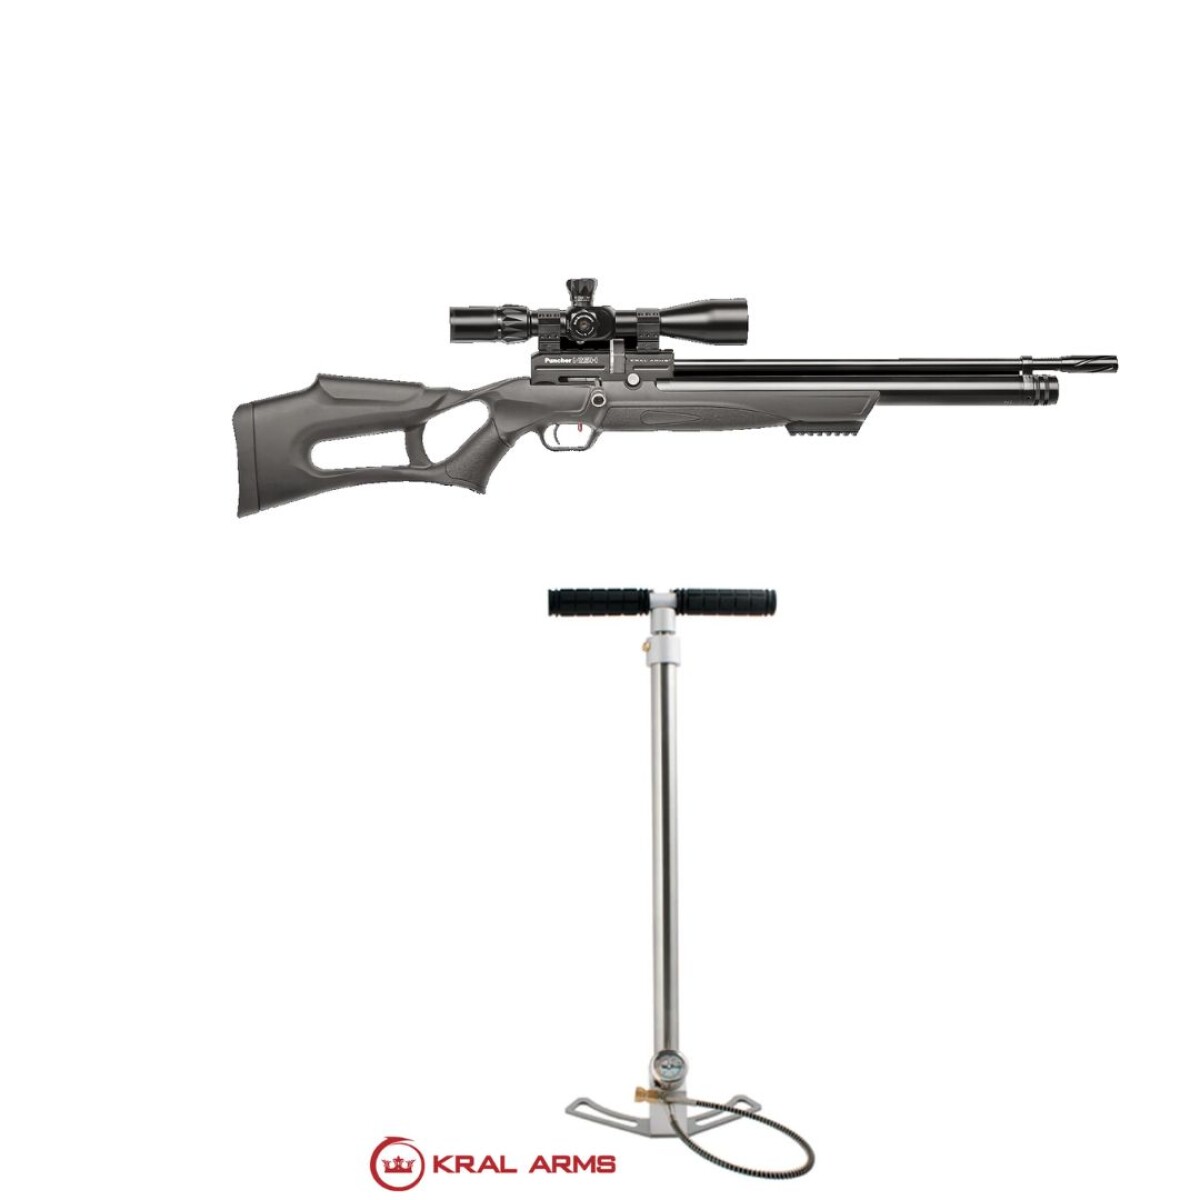 Rifle Chumbera PCP Puncher Nish S Calibre 5,5mm + inflador de mano - Kral Arms 